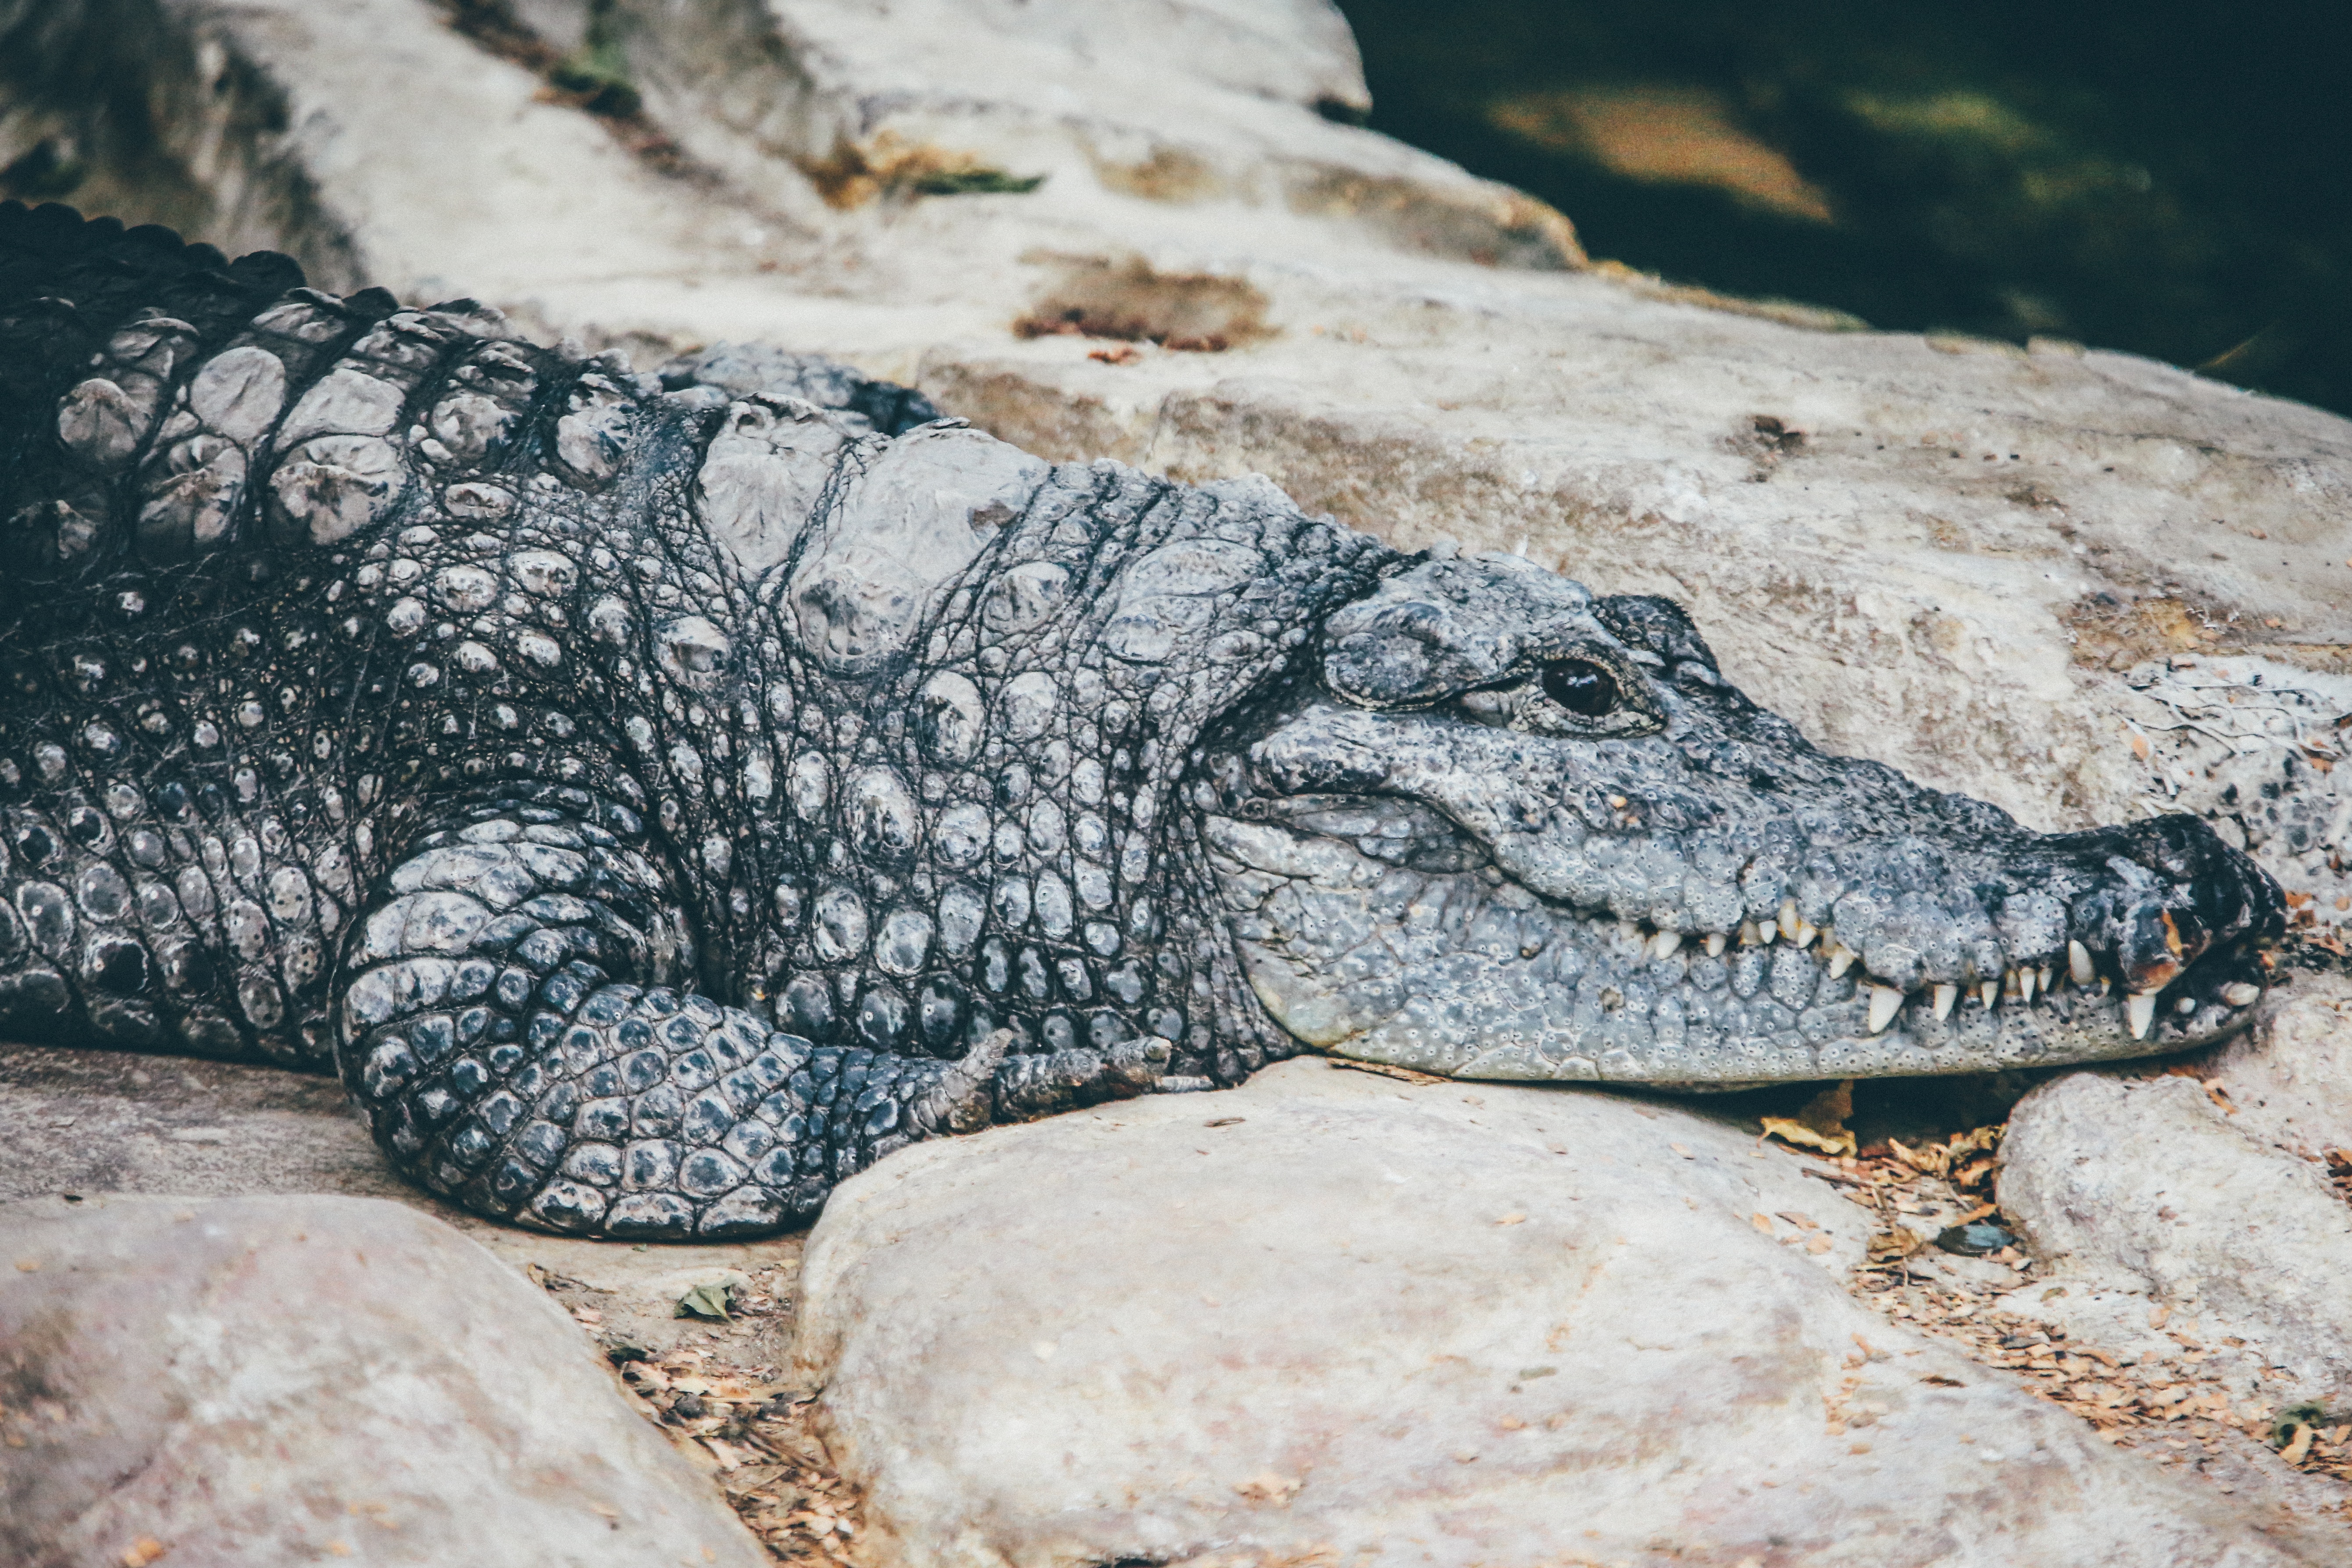 black and grey Crocodile on grey rock during daytime